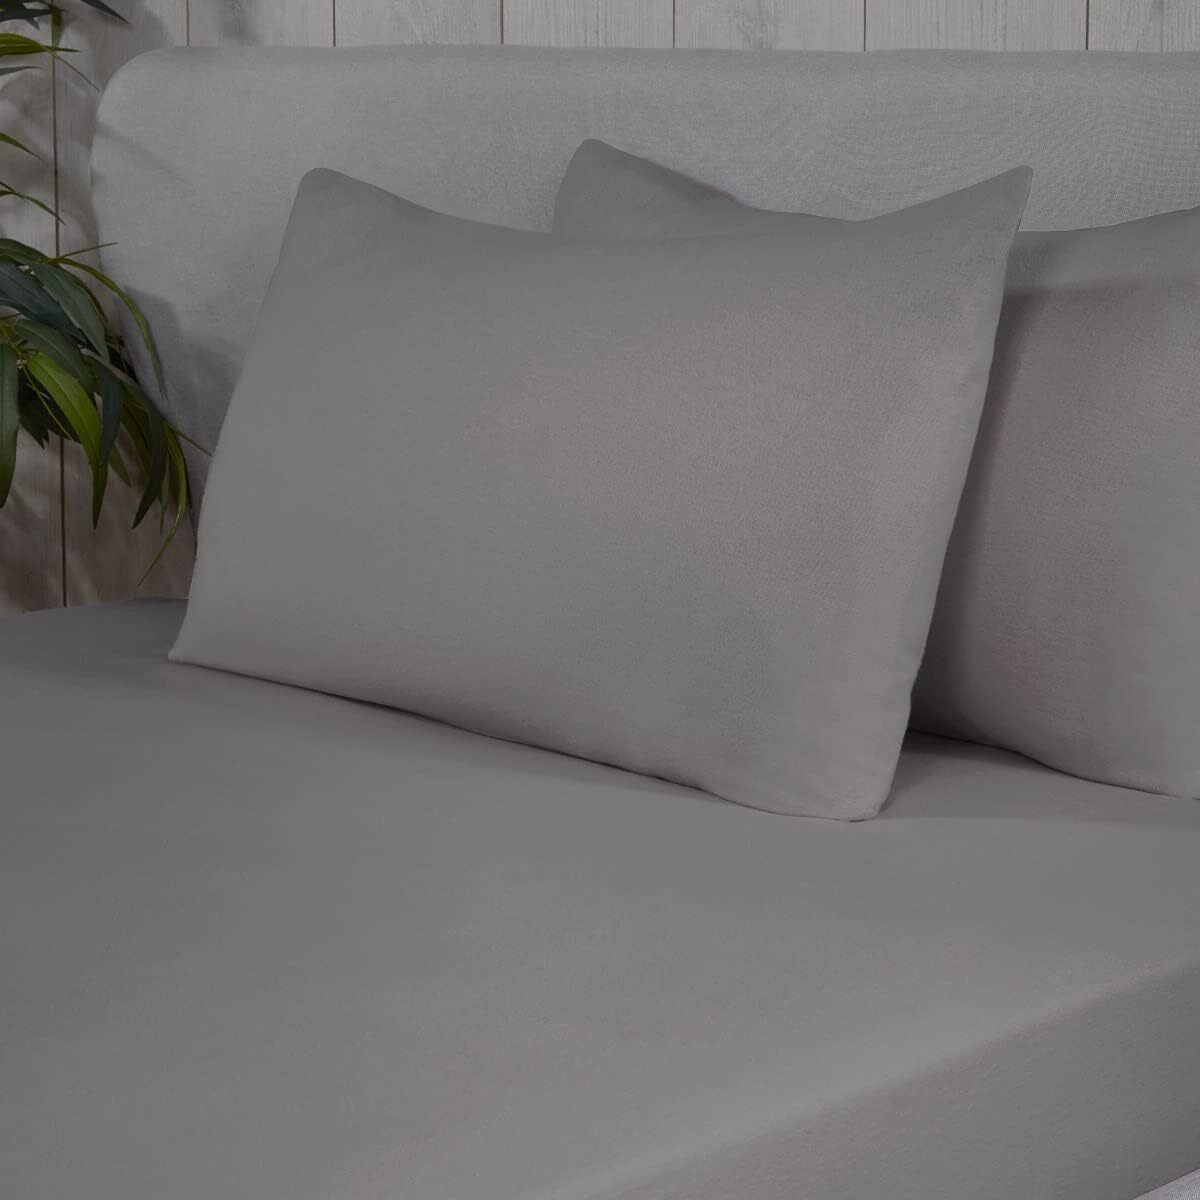 Sleepdown Fitted Sheet 100% Brushed Cotton Flannelette Luxury Bedding - King